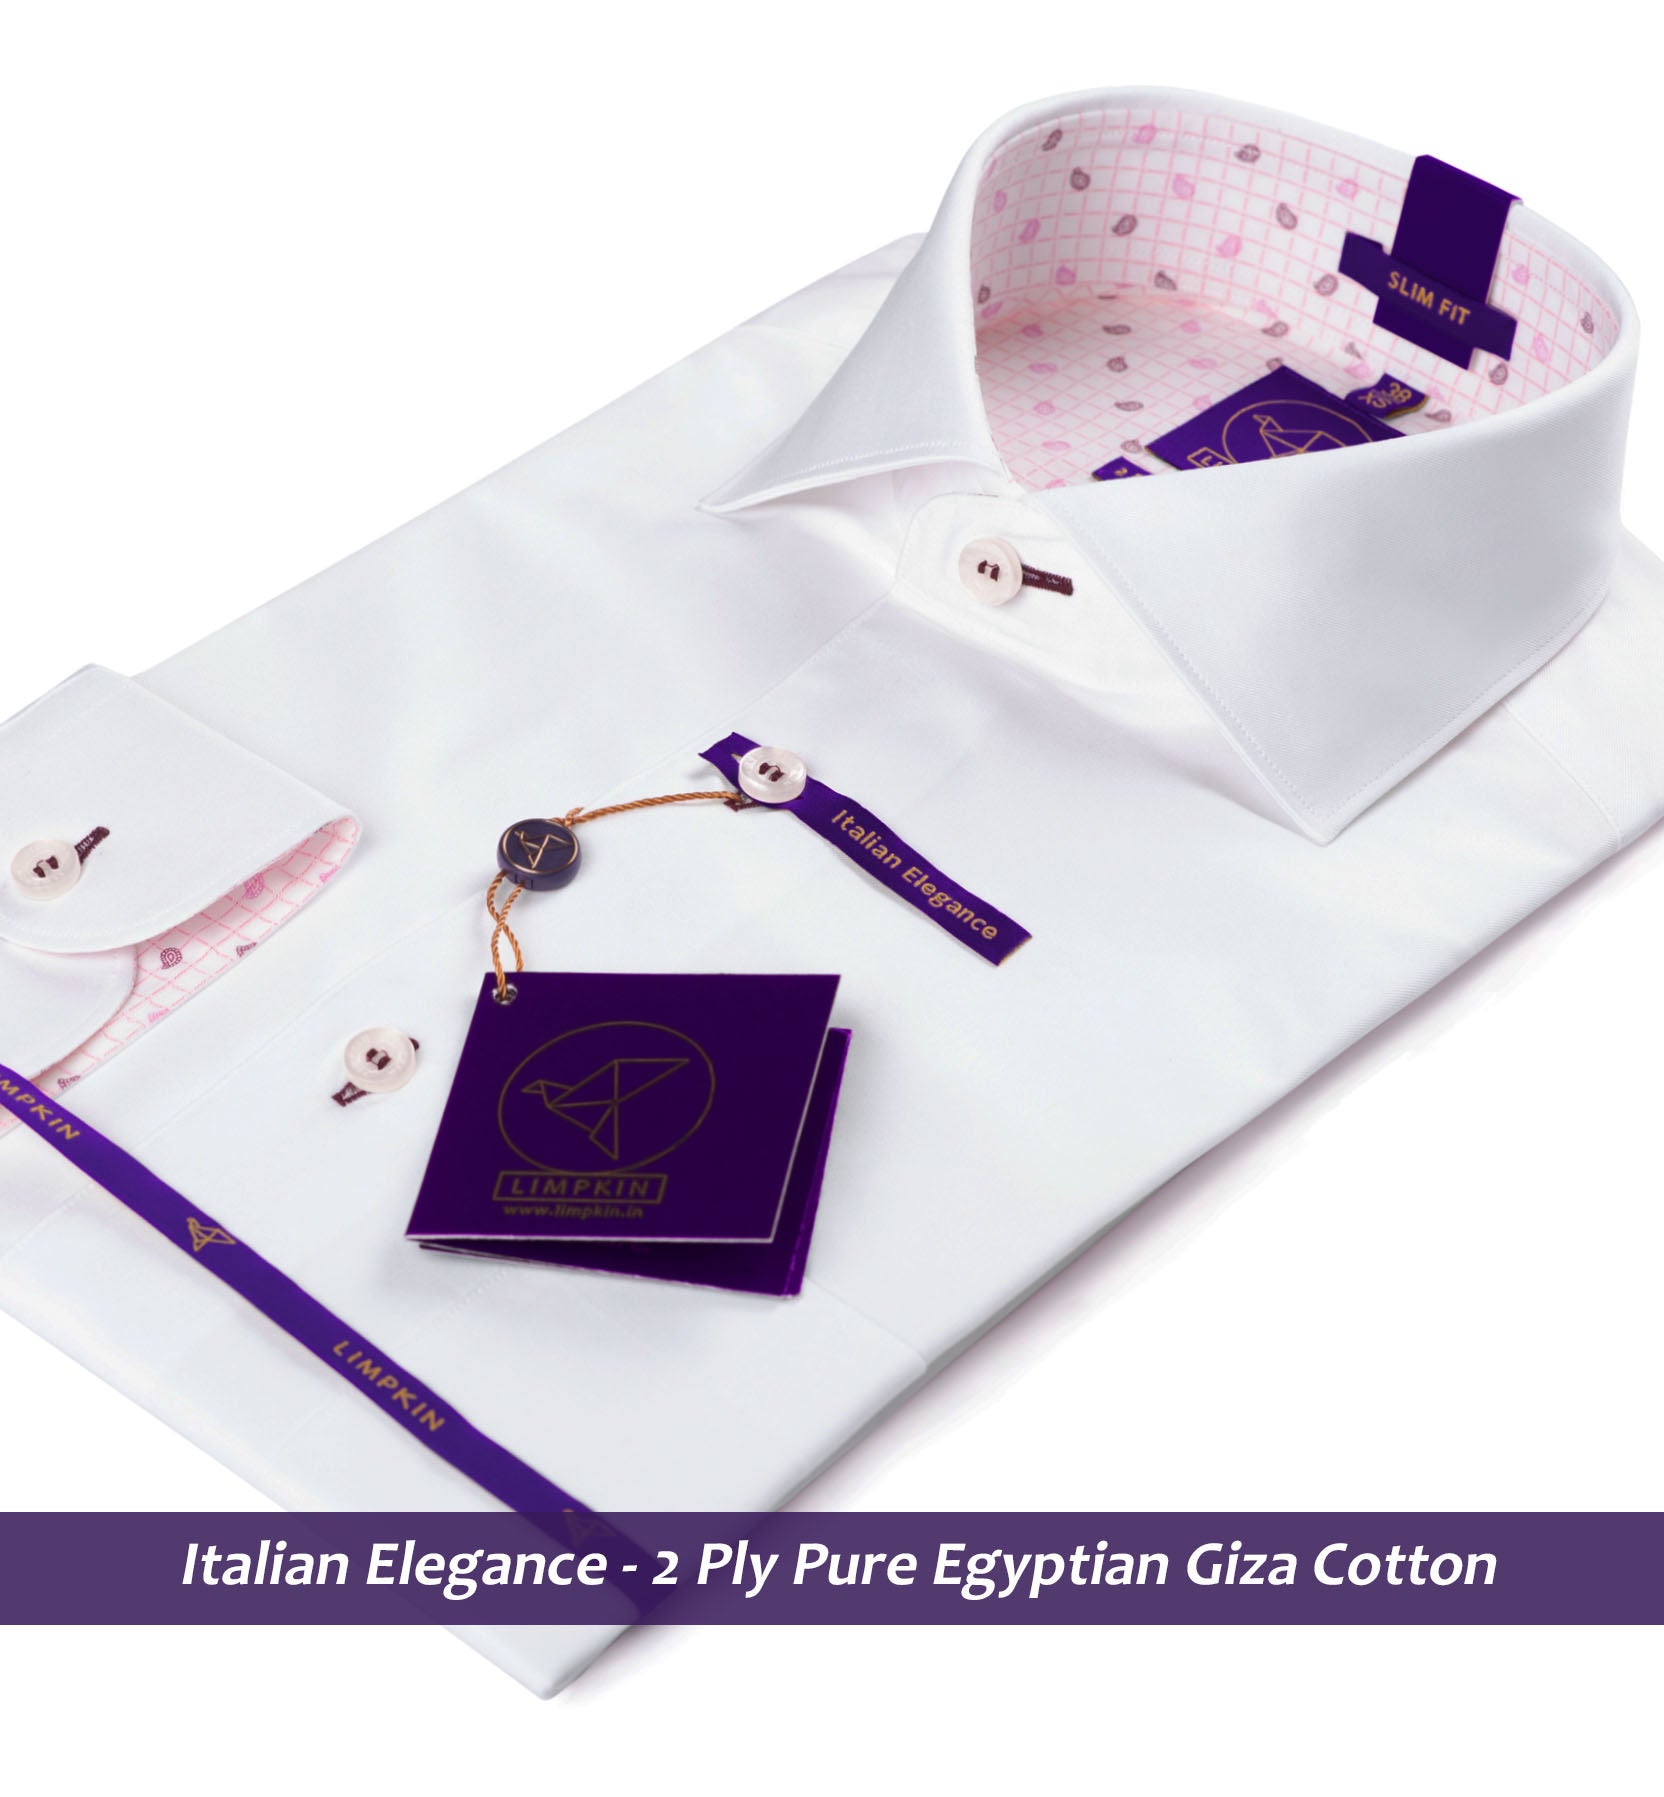 White Shirt - Shirts for Men | Limpkin - Italian Elegance